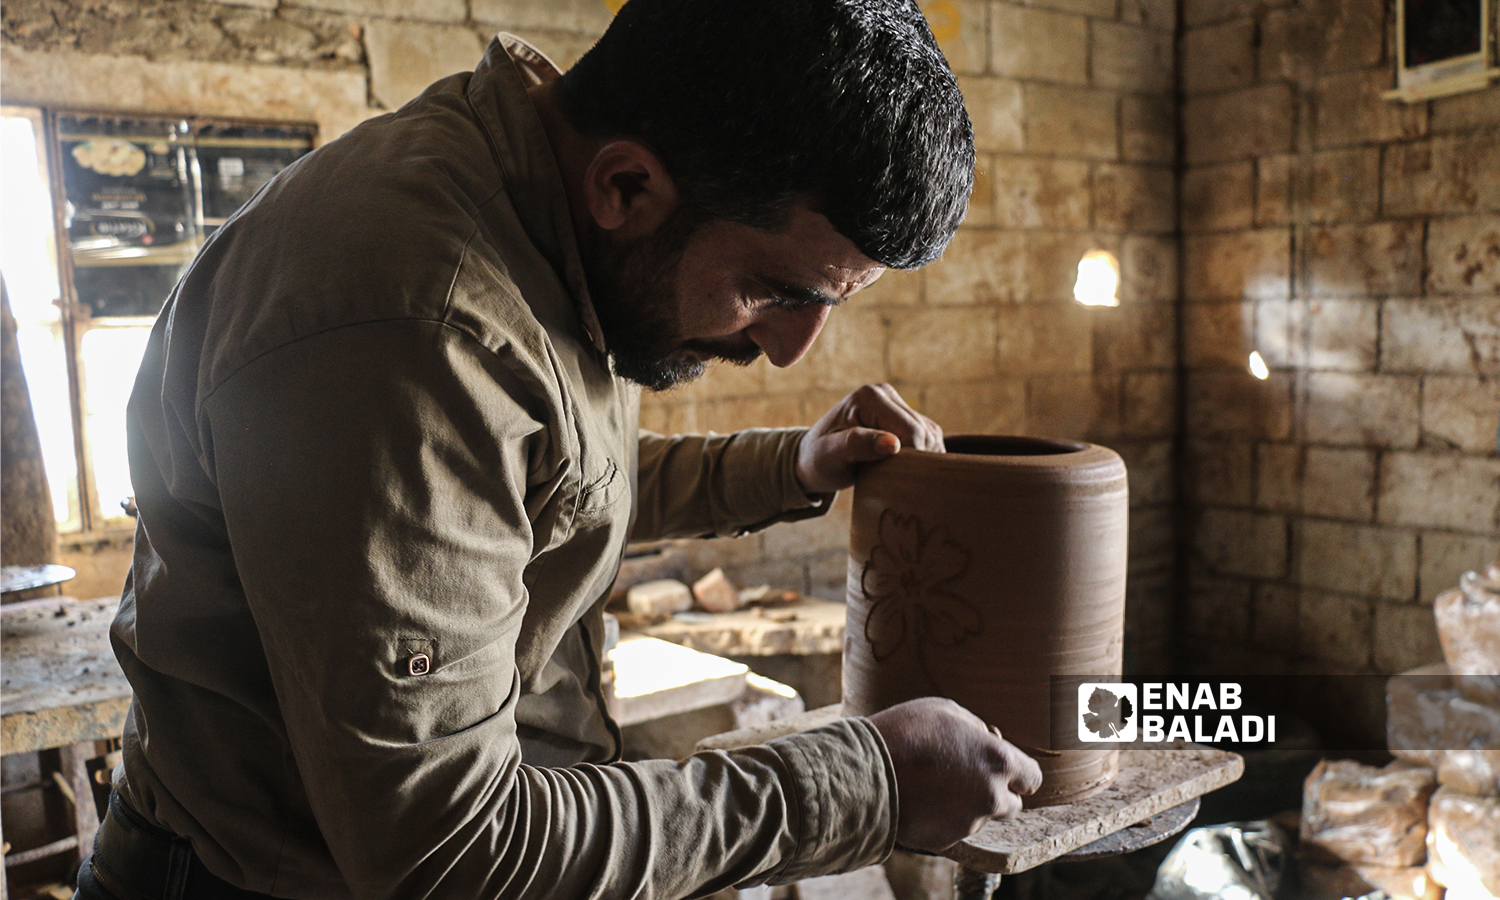 A Syrian potter molding clay pots in Armanaz town, Idlib - 1 February 2022 (Enab Baladi / Iyad Abdul Jawad)